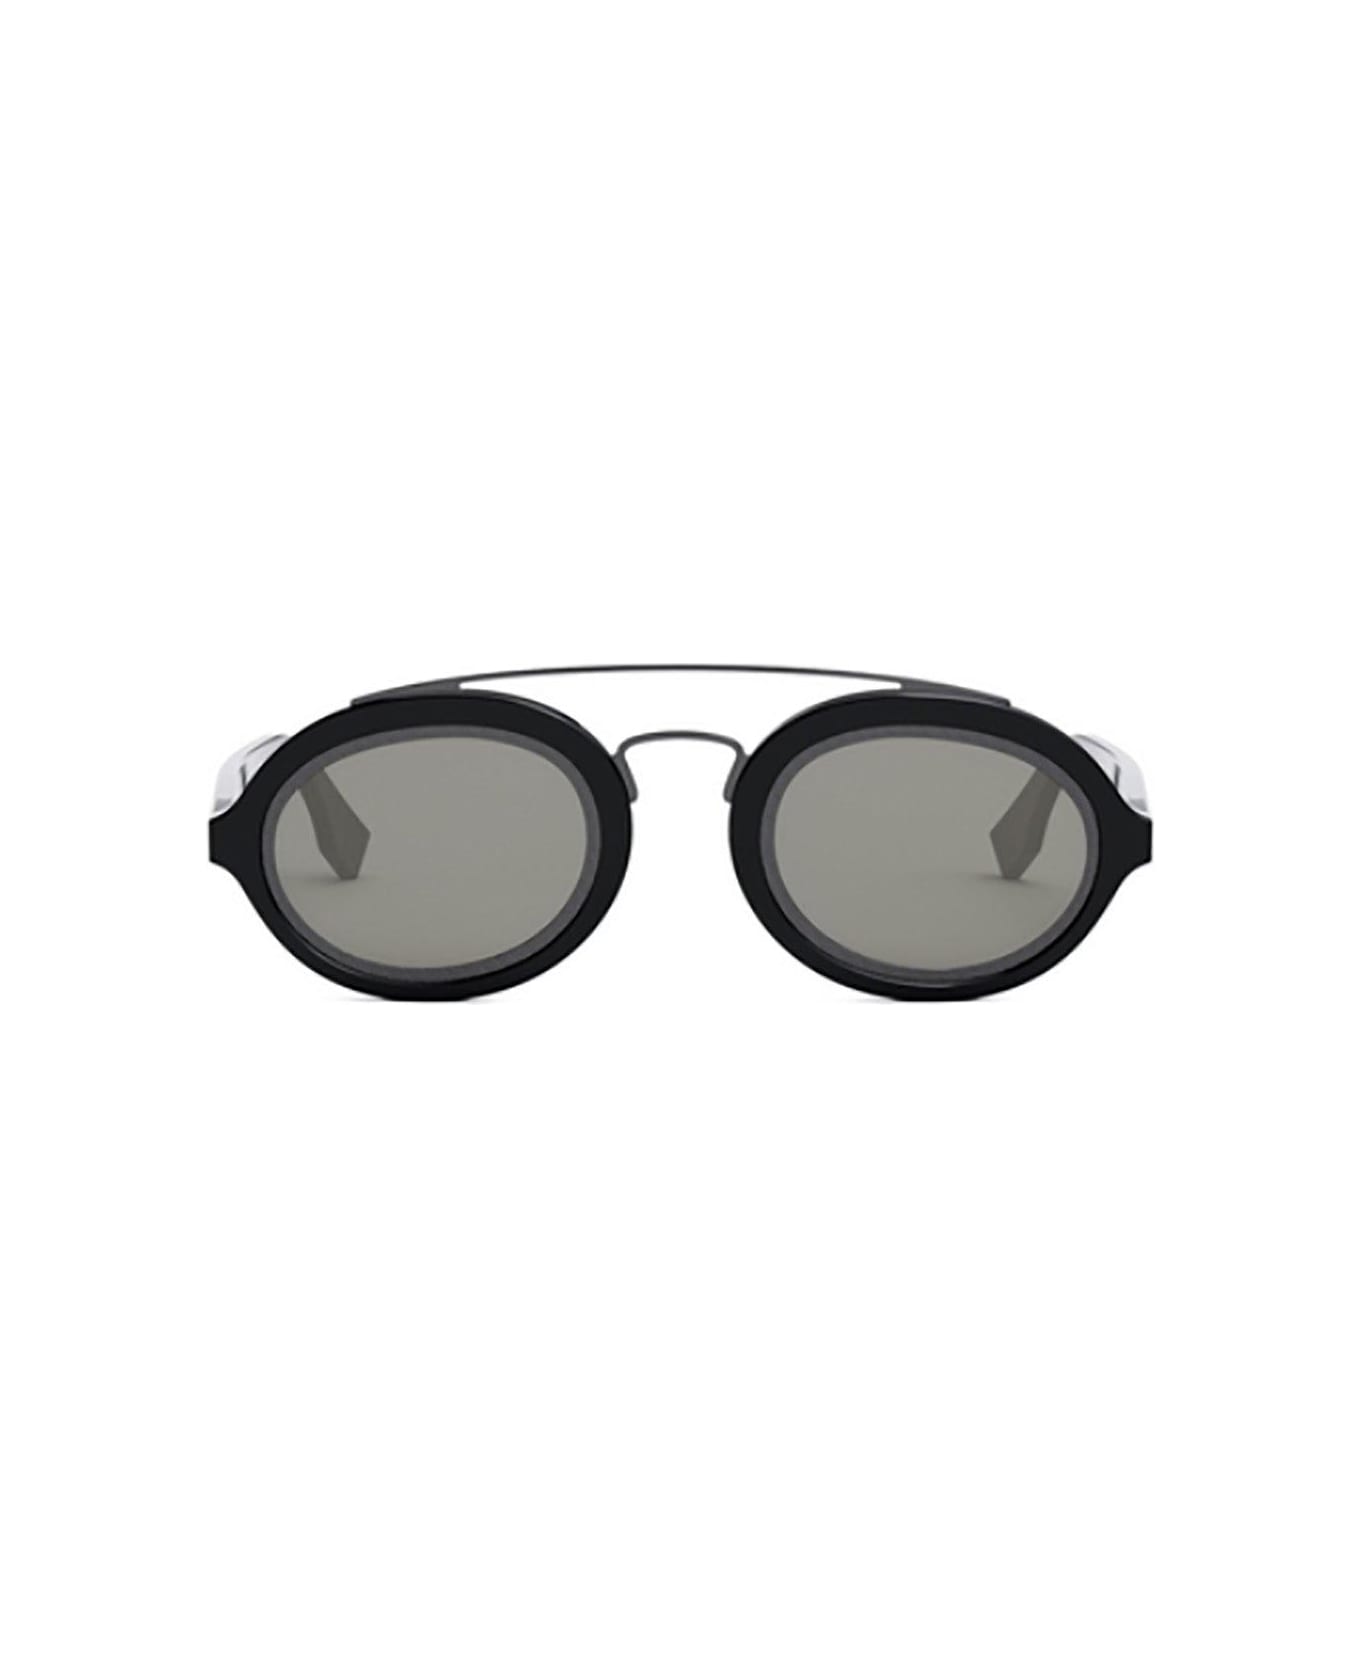 Fendi Eyewear Oval Frame Sunglasses - 01a